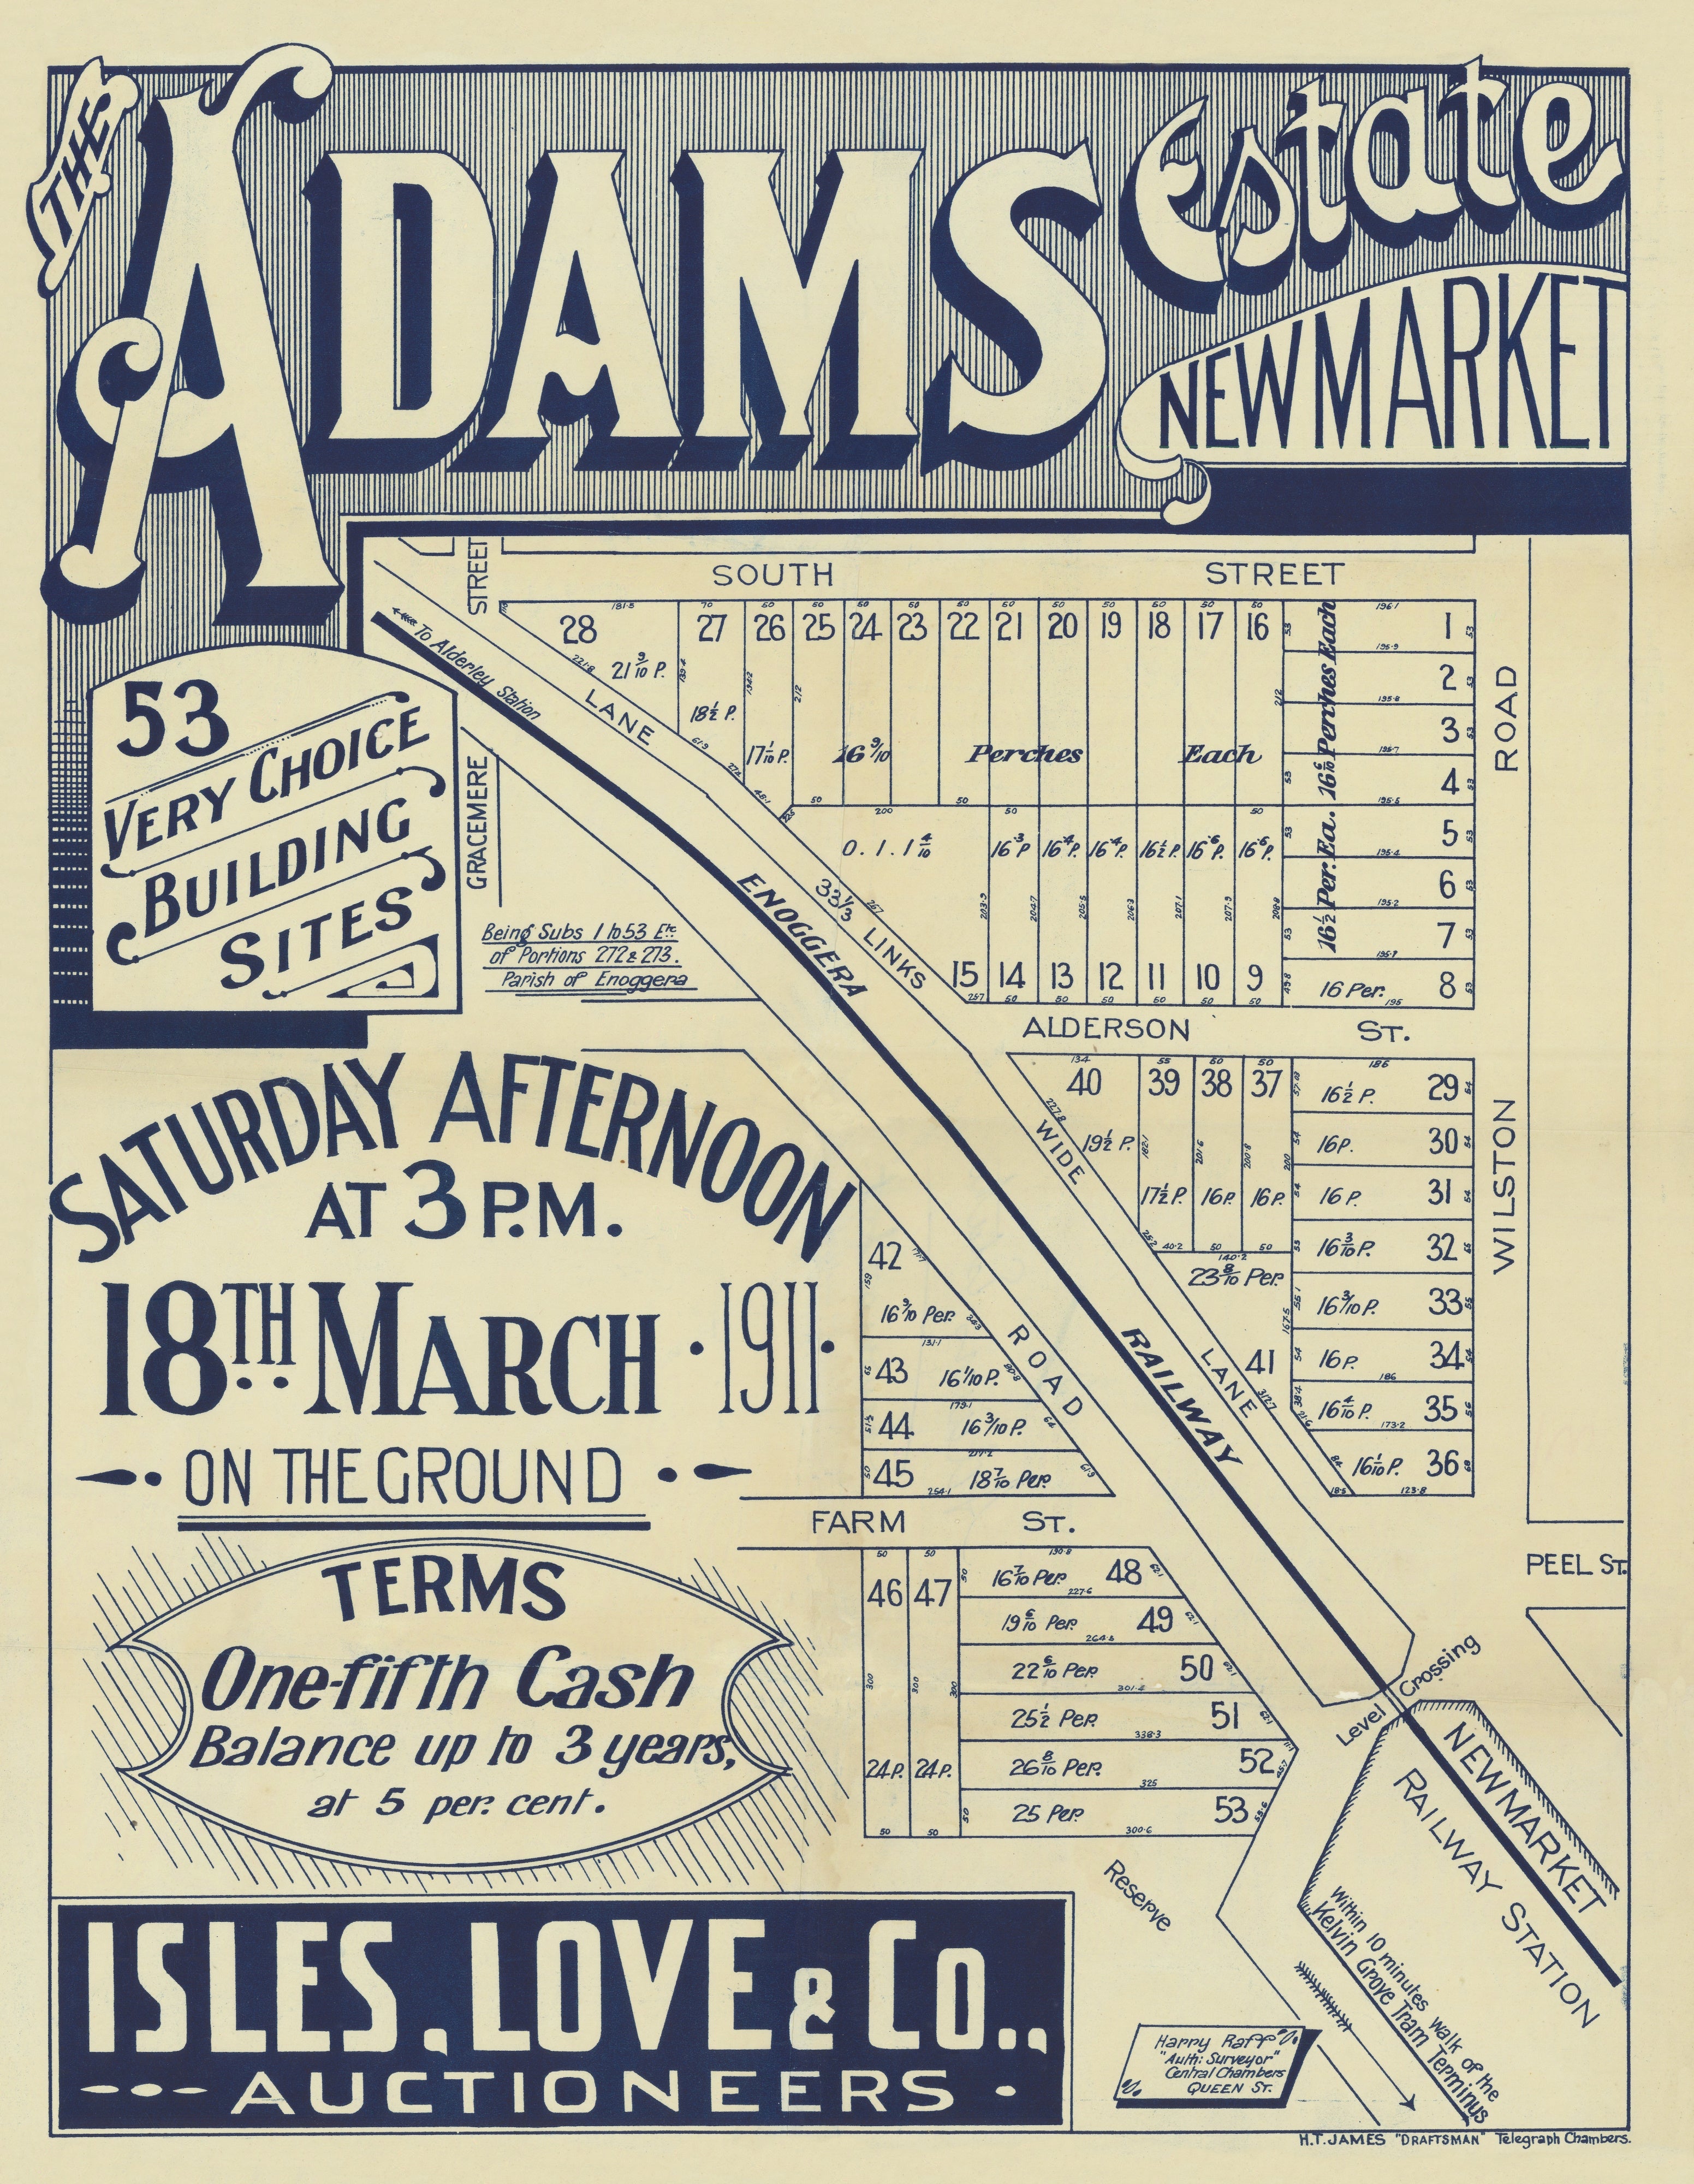 1911 Newmarket - The Adams Estate